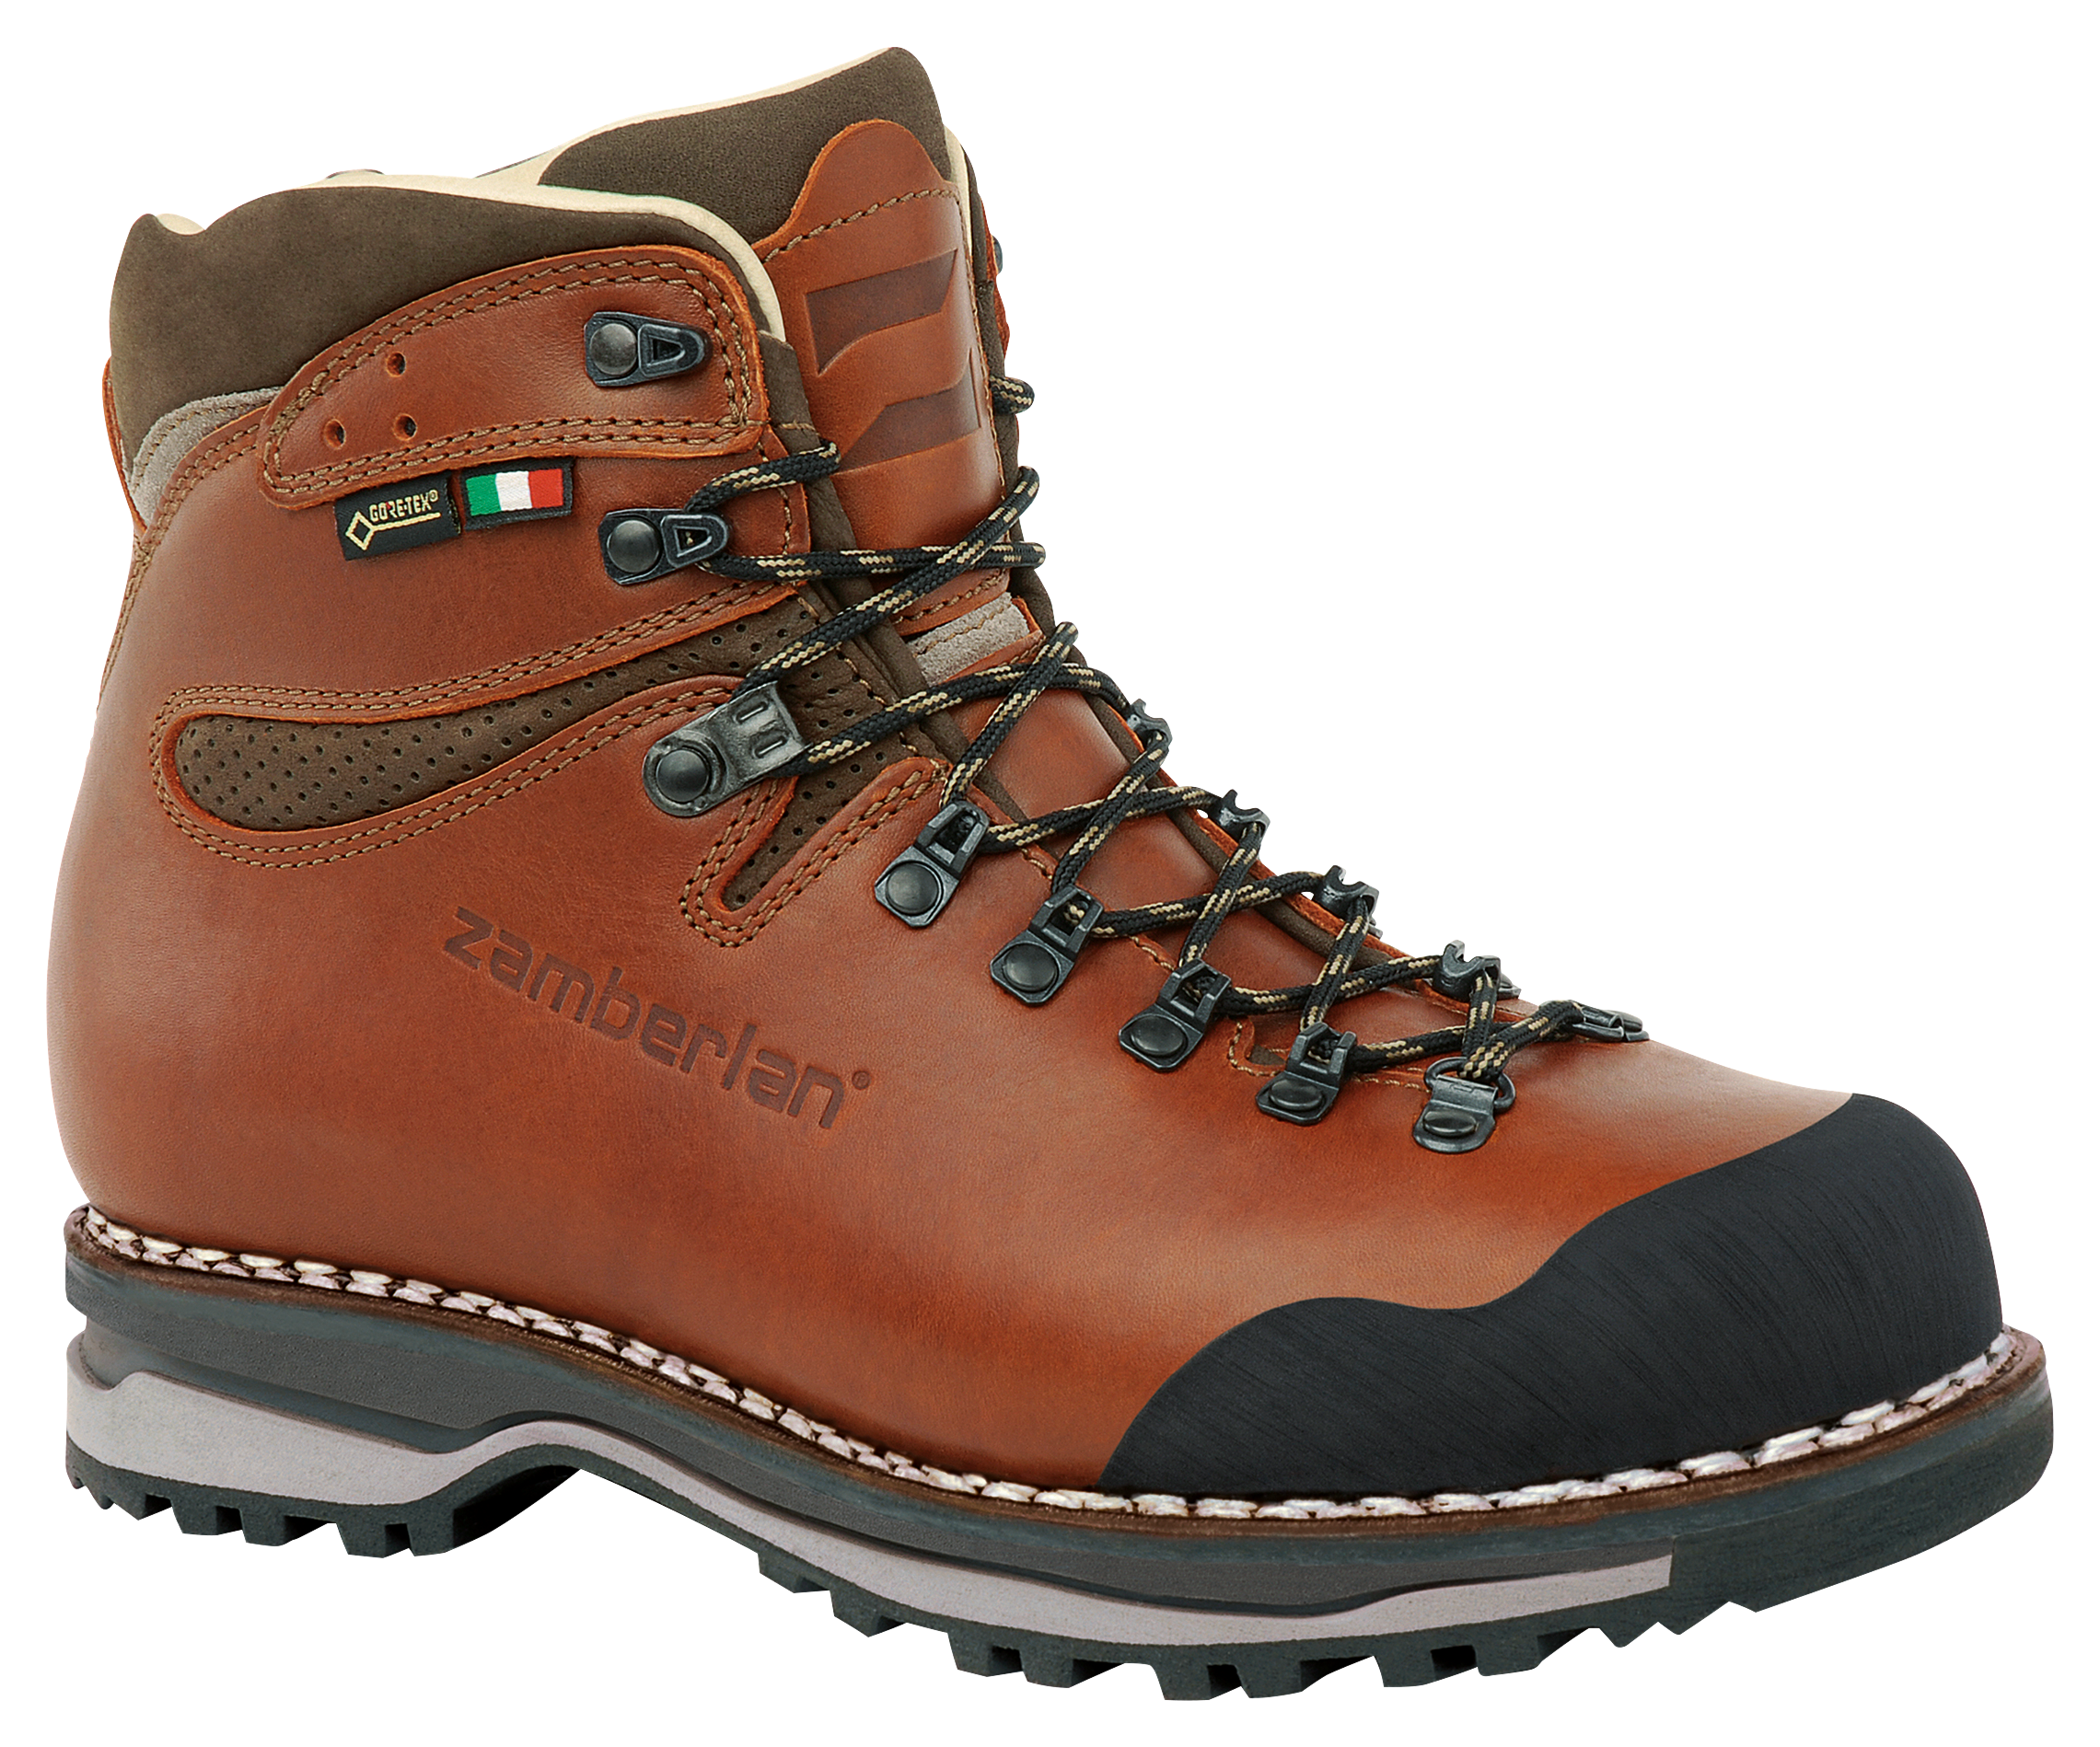 Zamberlan 1025 Tofane NW GTX RR Waterproof Hiking Boots for Men - Waxed Brick - 10.5M